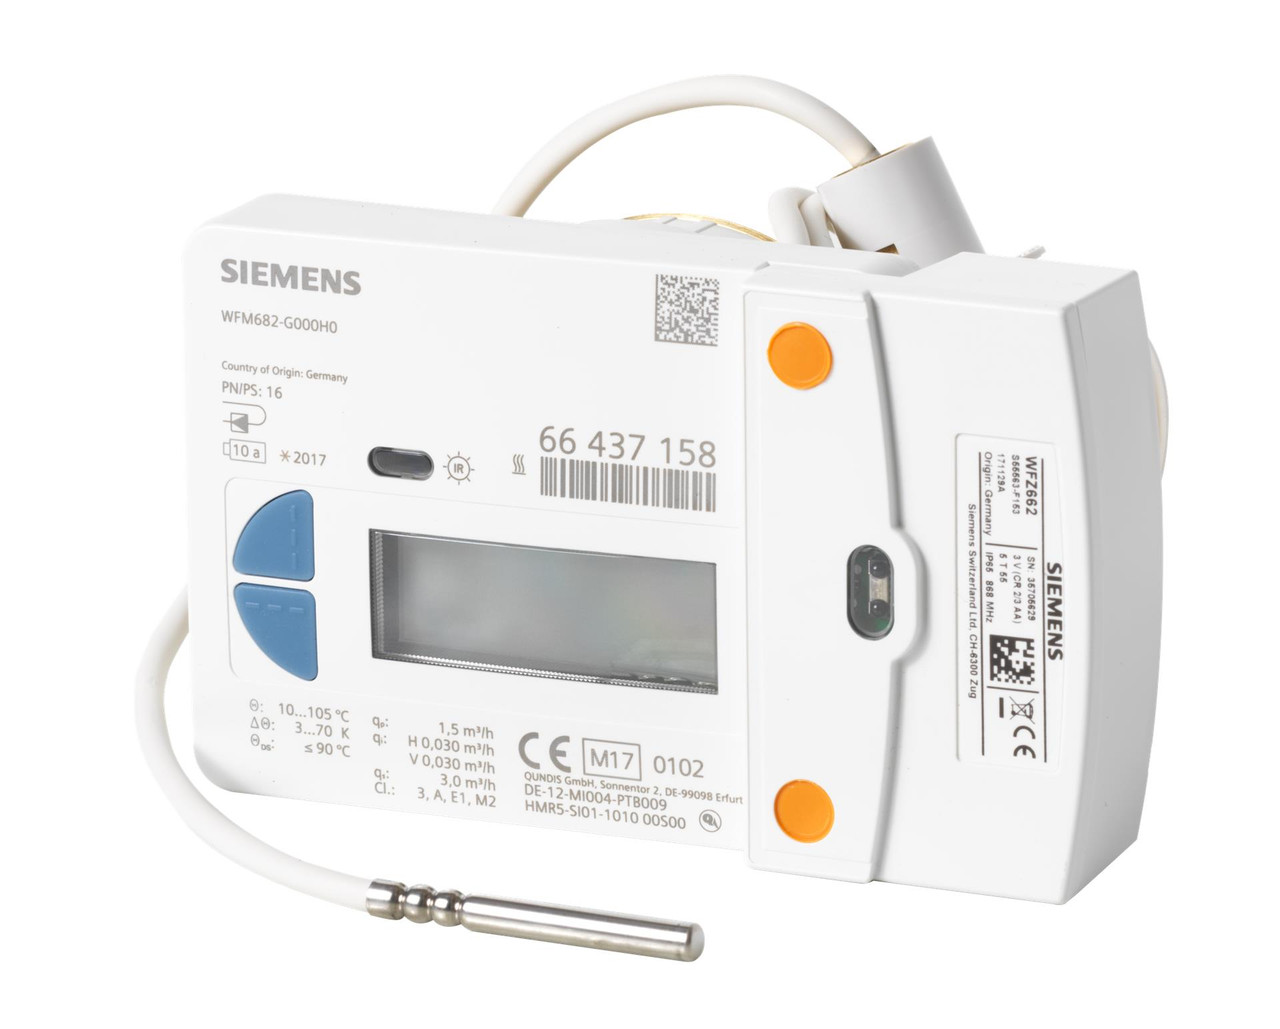 Siemens WFM681-G000H0, S55561-F260 RF heat meter set